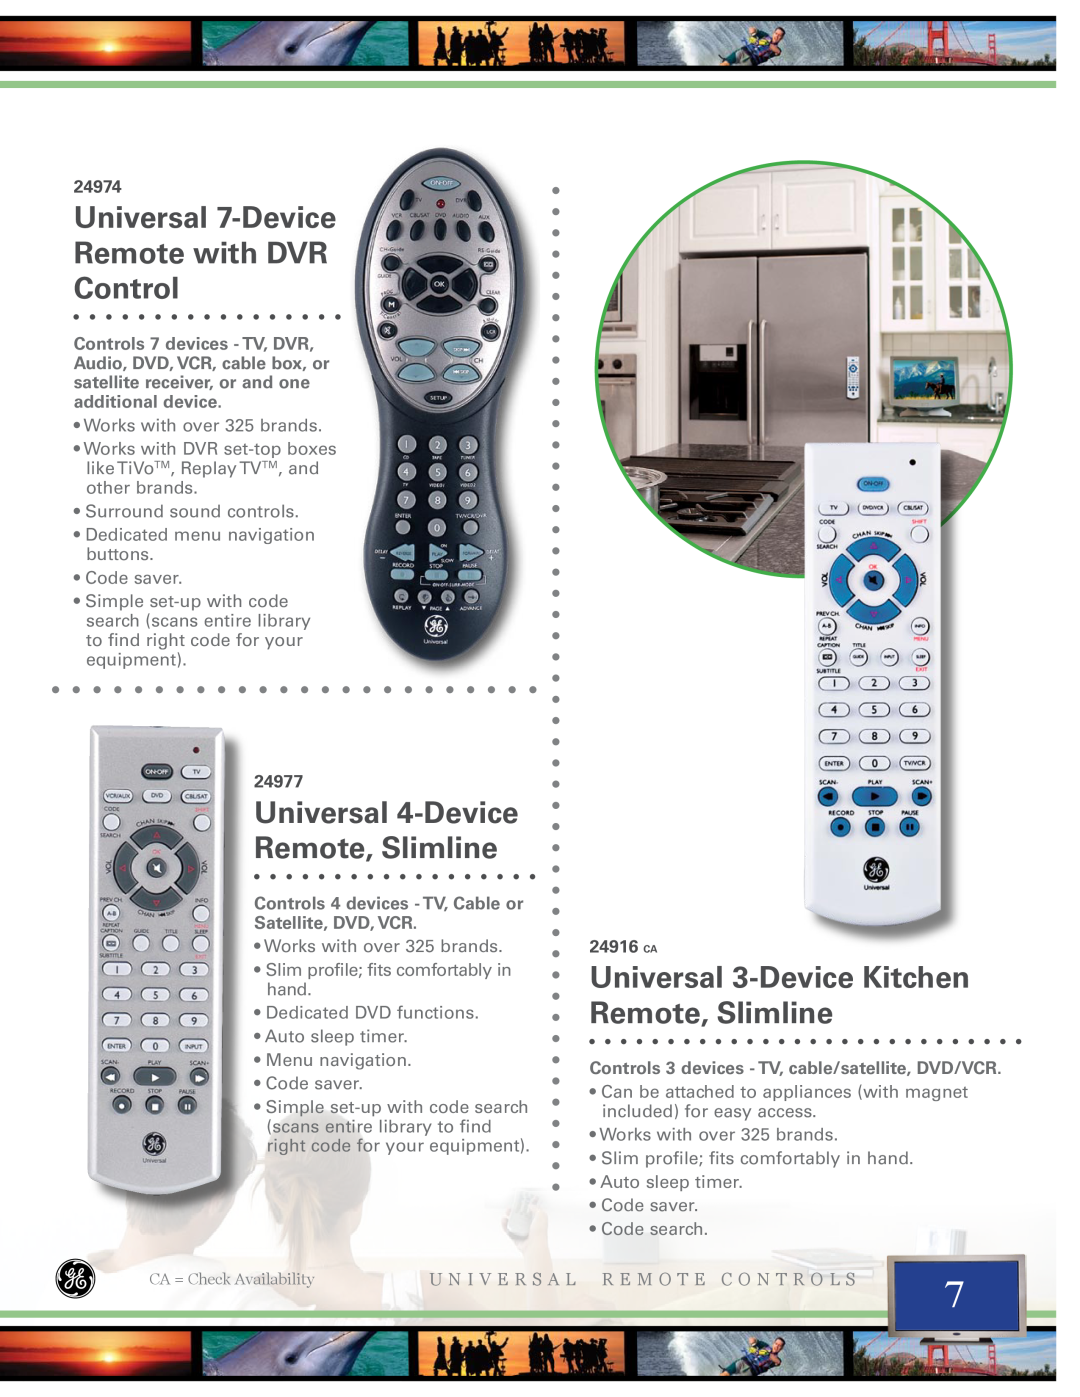 Jasco 24950, 25001 Universal 7-Device Remote with DVR Control, Universal 4-Device Remote, Slimline, 24974, 24977, 24916 CA 